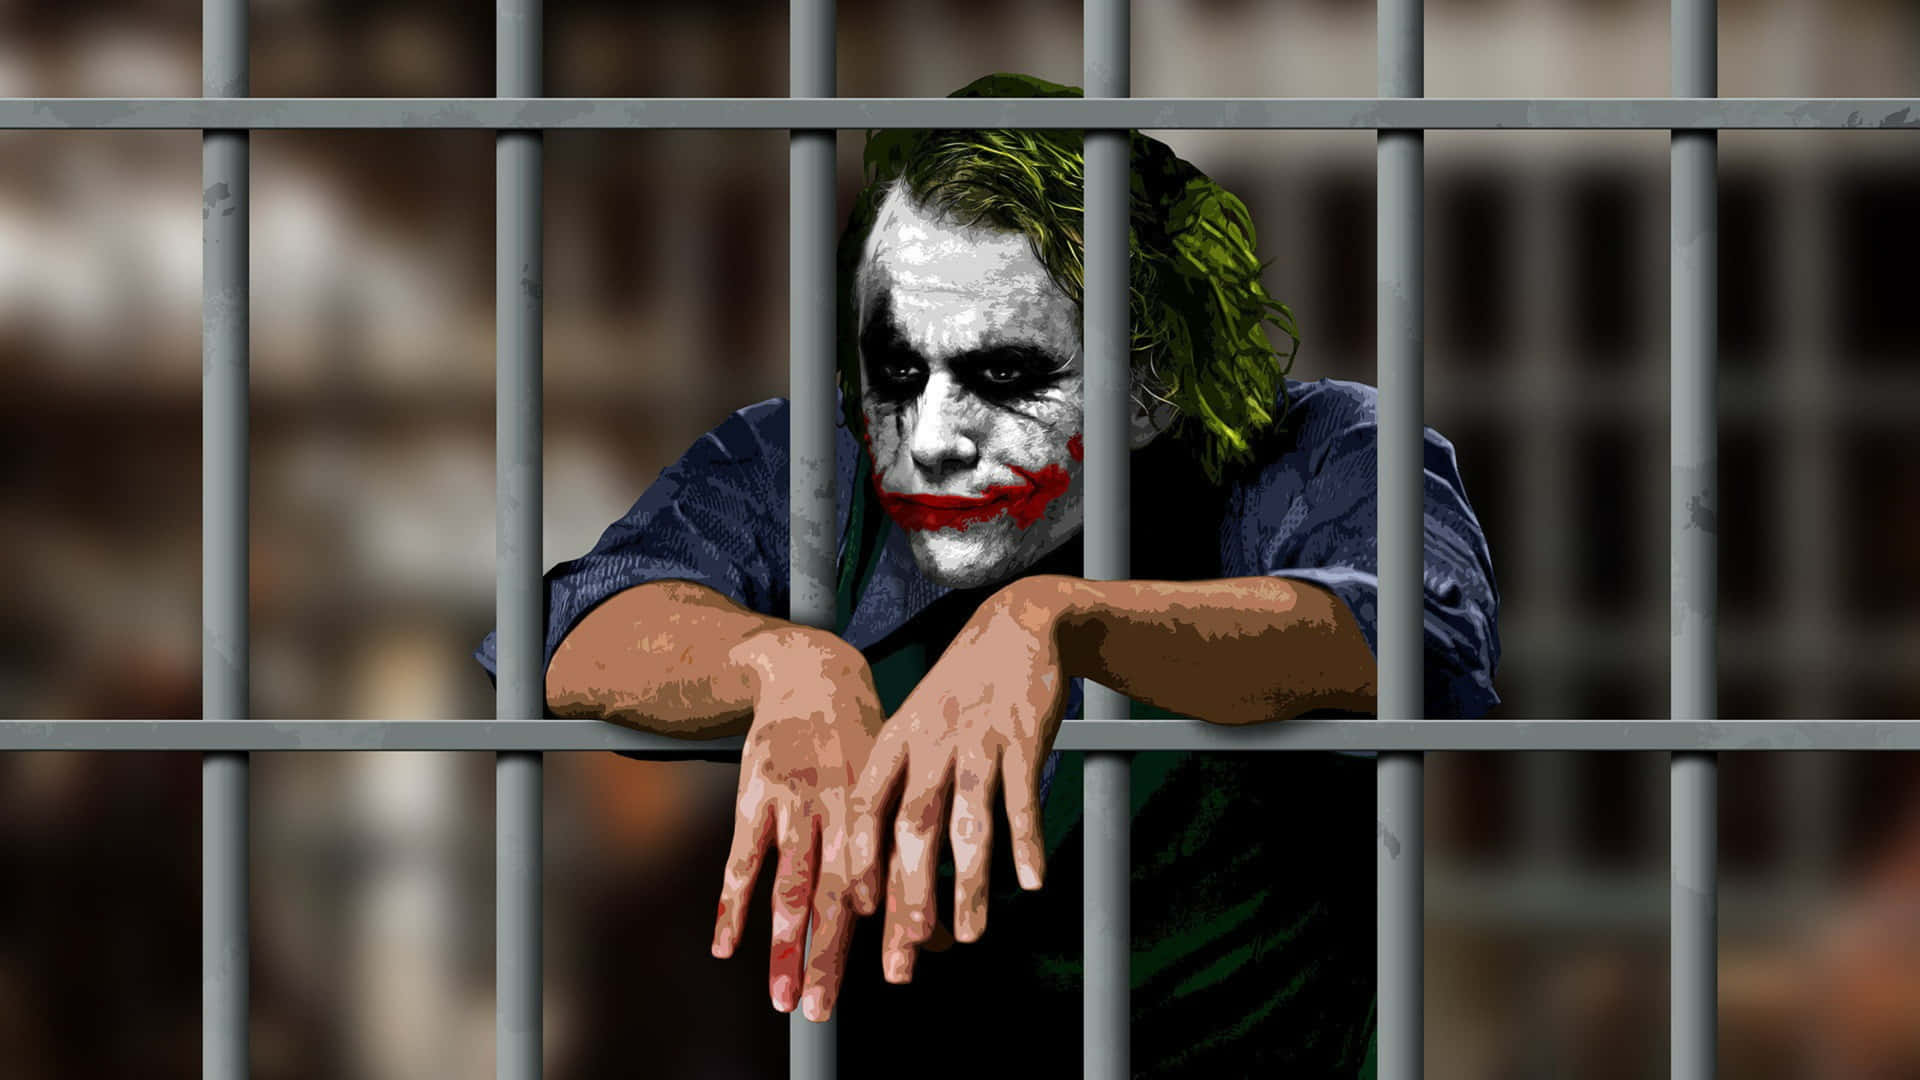 Dark Knight Joker In 4k Ultra Hd Blur Jail Wallpaper